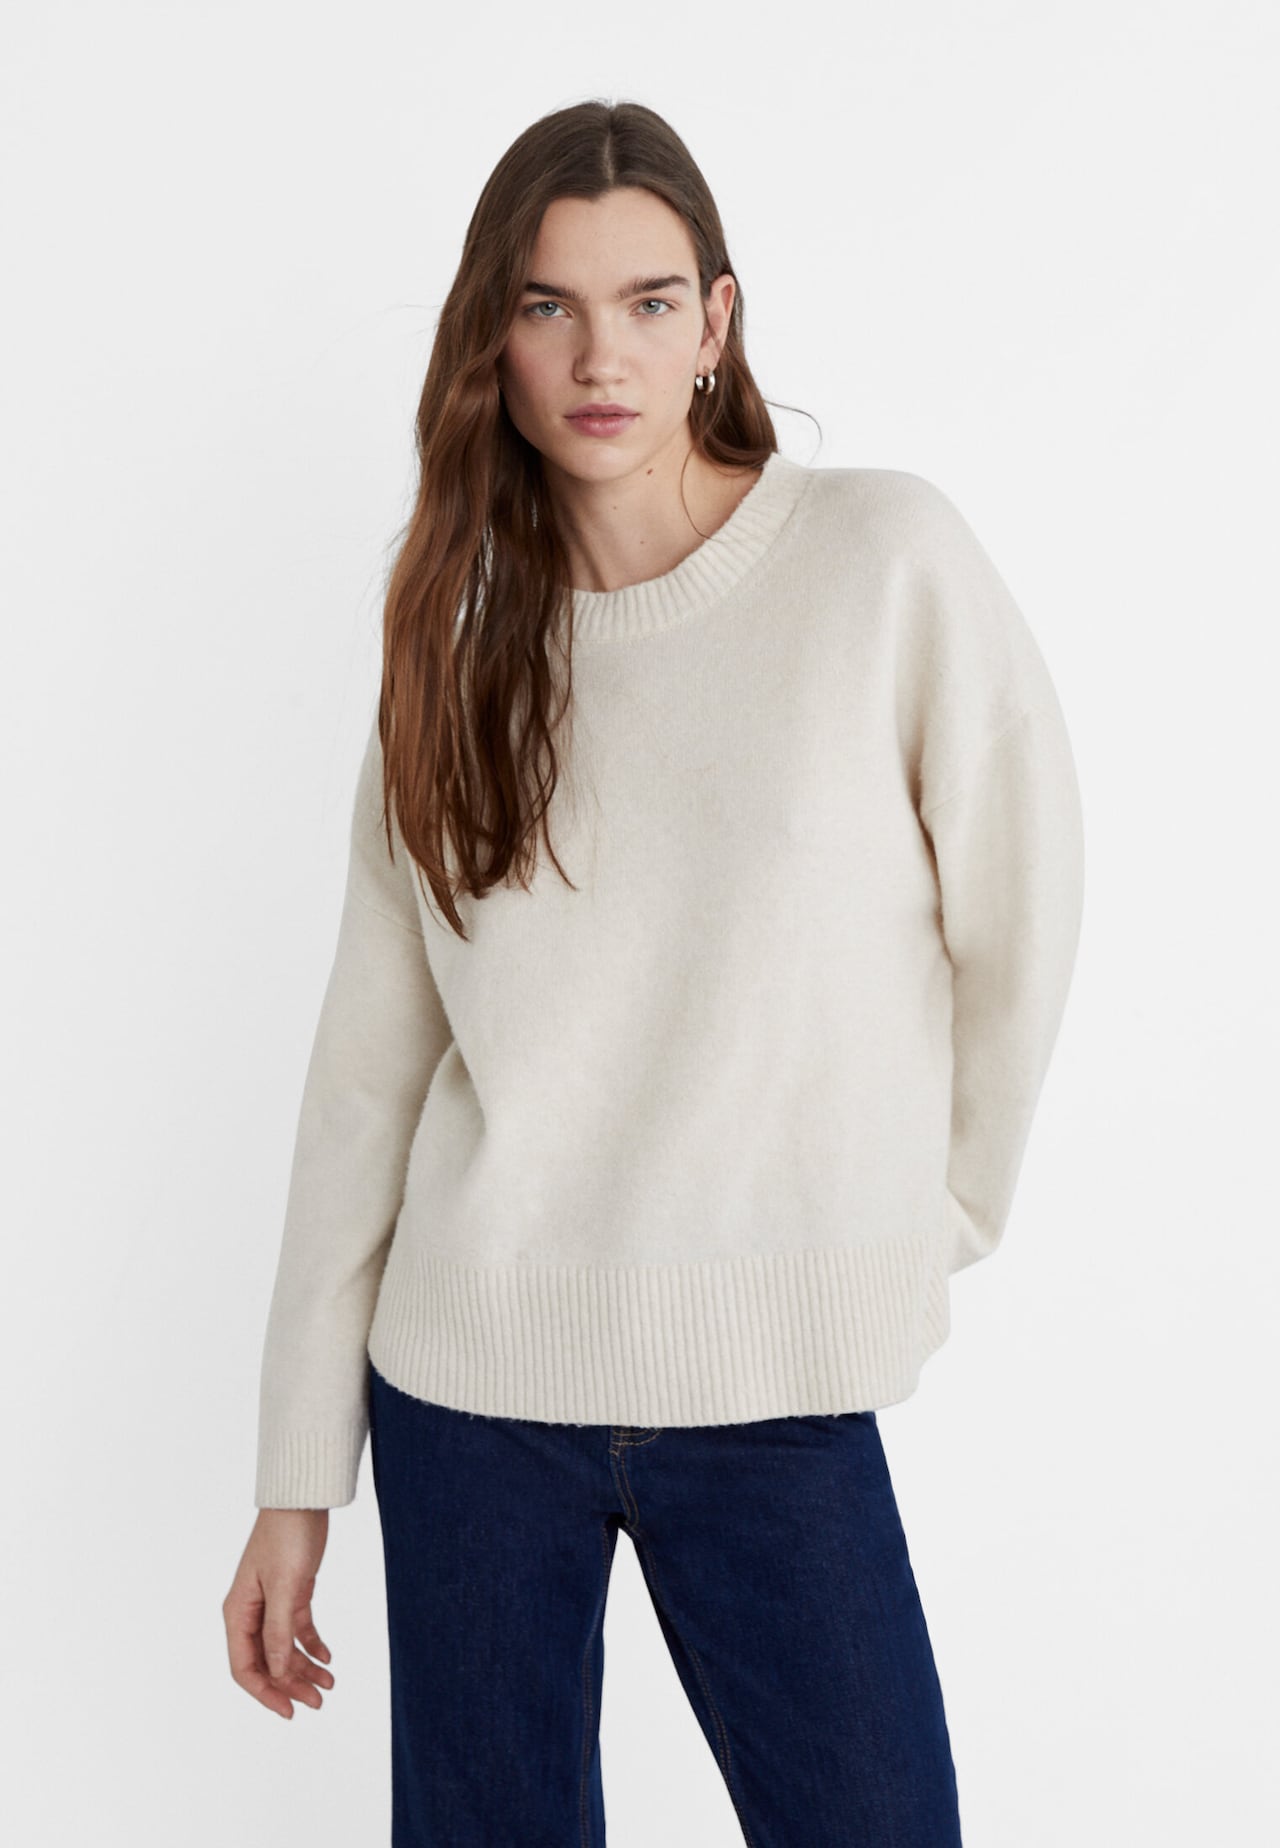 Soft-touch knit sweater - Women's fashion